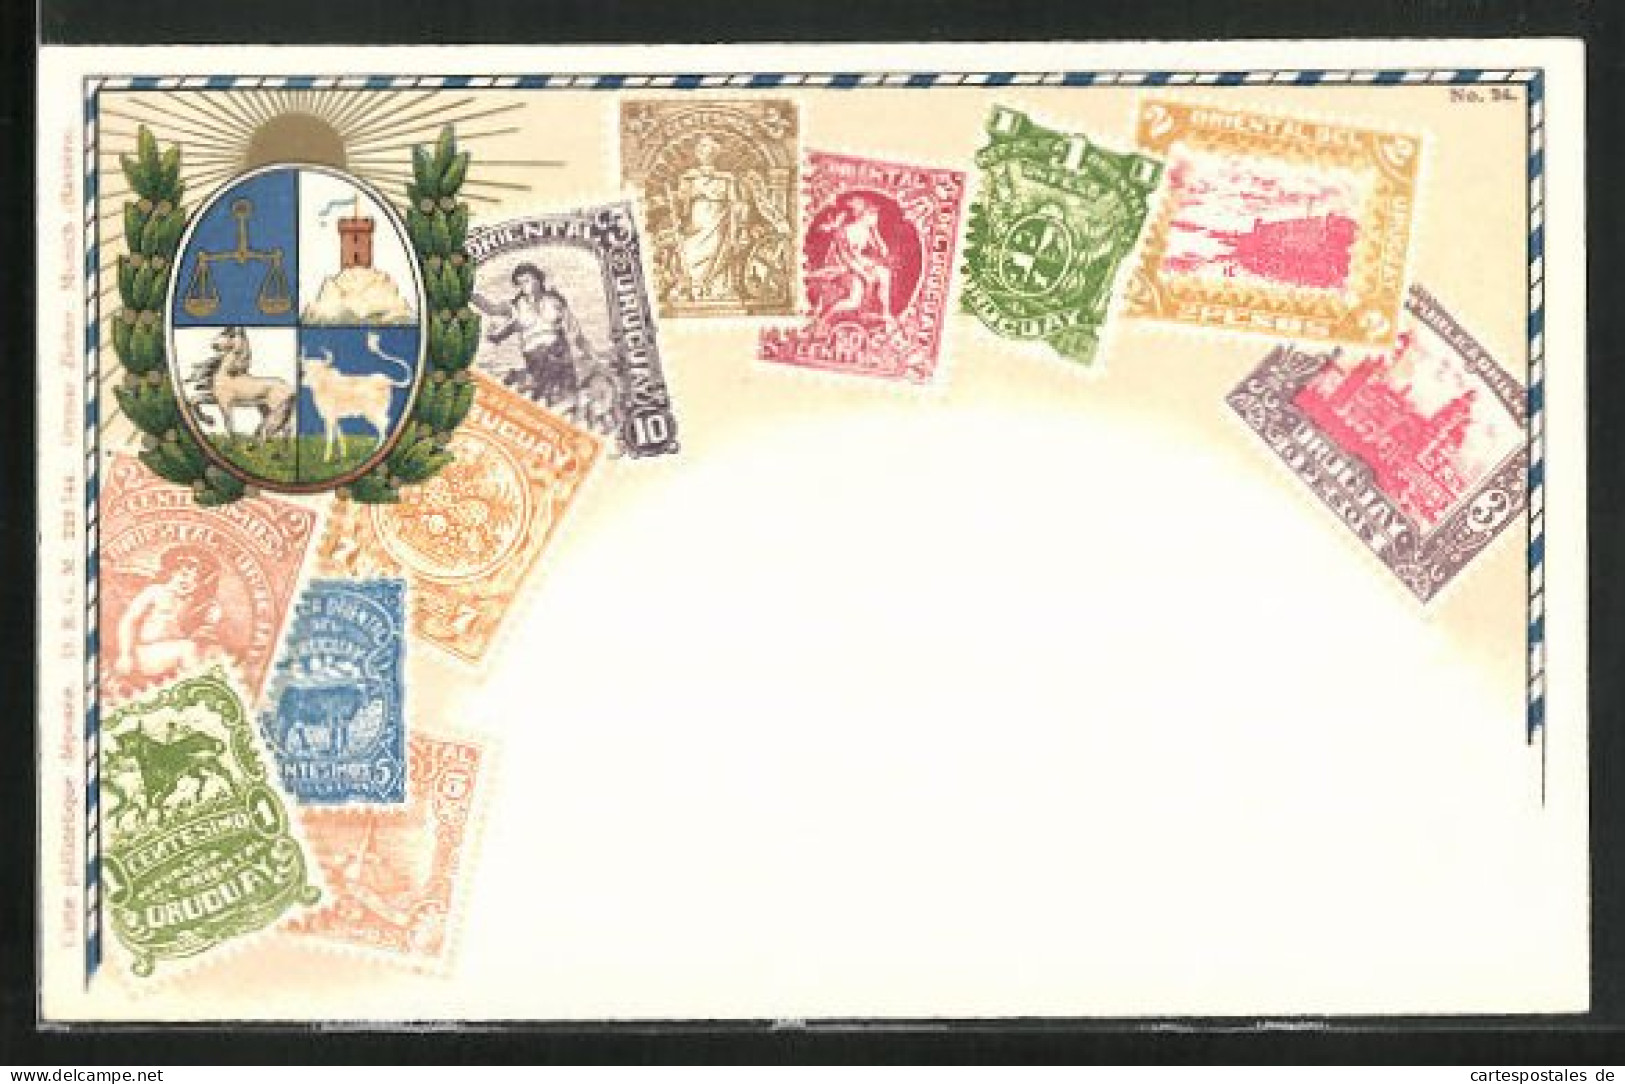 Präge-AK Uruguay, Briefmarken Und Wappen  - Timbres (représentations)